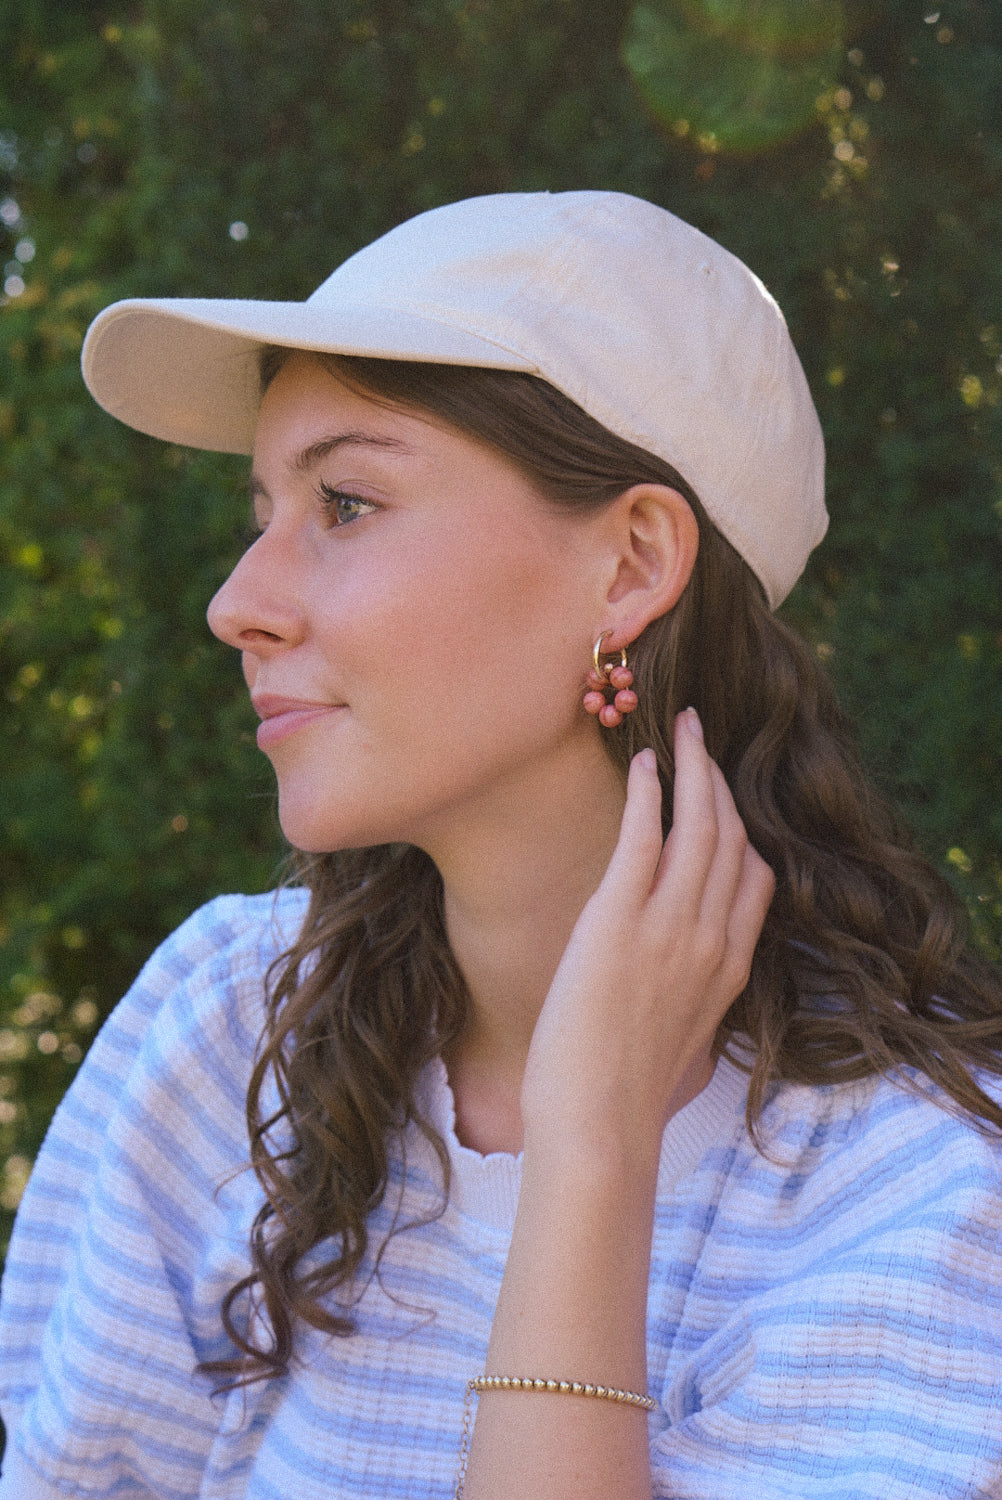 Petal - small hoop earrings with pendant